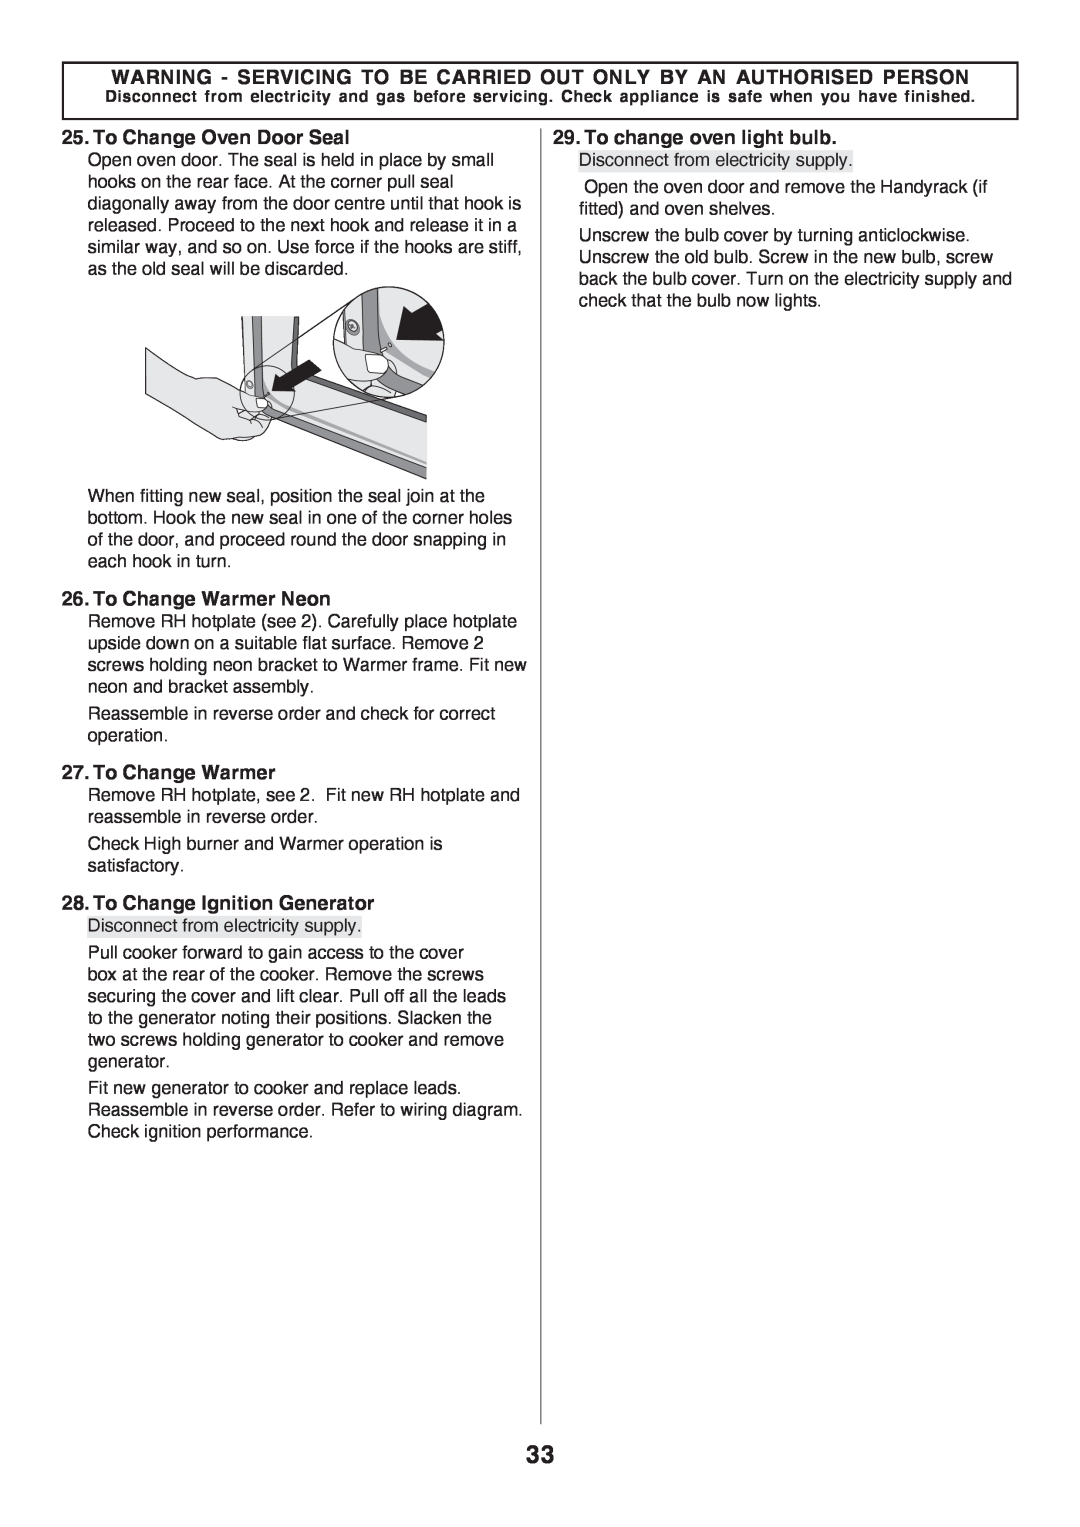 Rangemaster U106140-05 manual To Change Oven Door Seal, To Change Warmer Neon, To Change Ignition Generator 